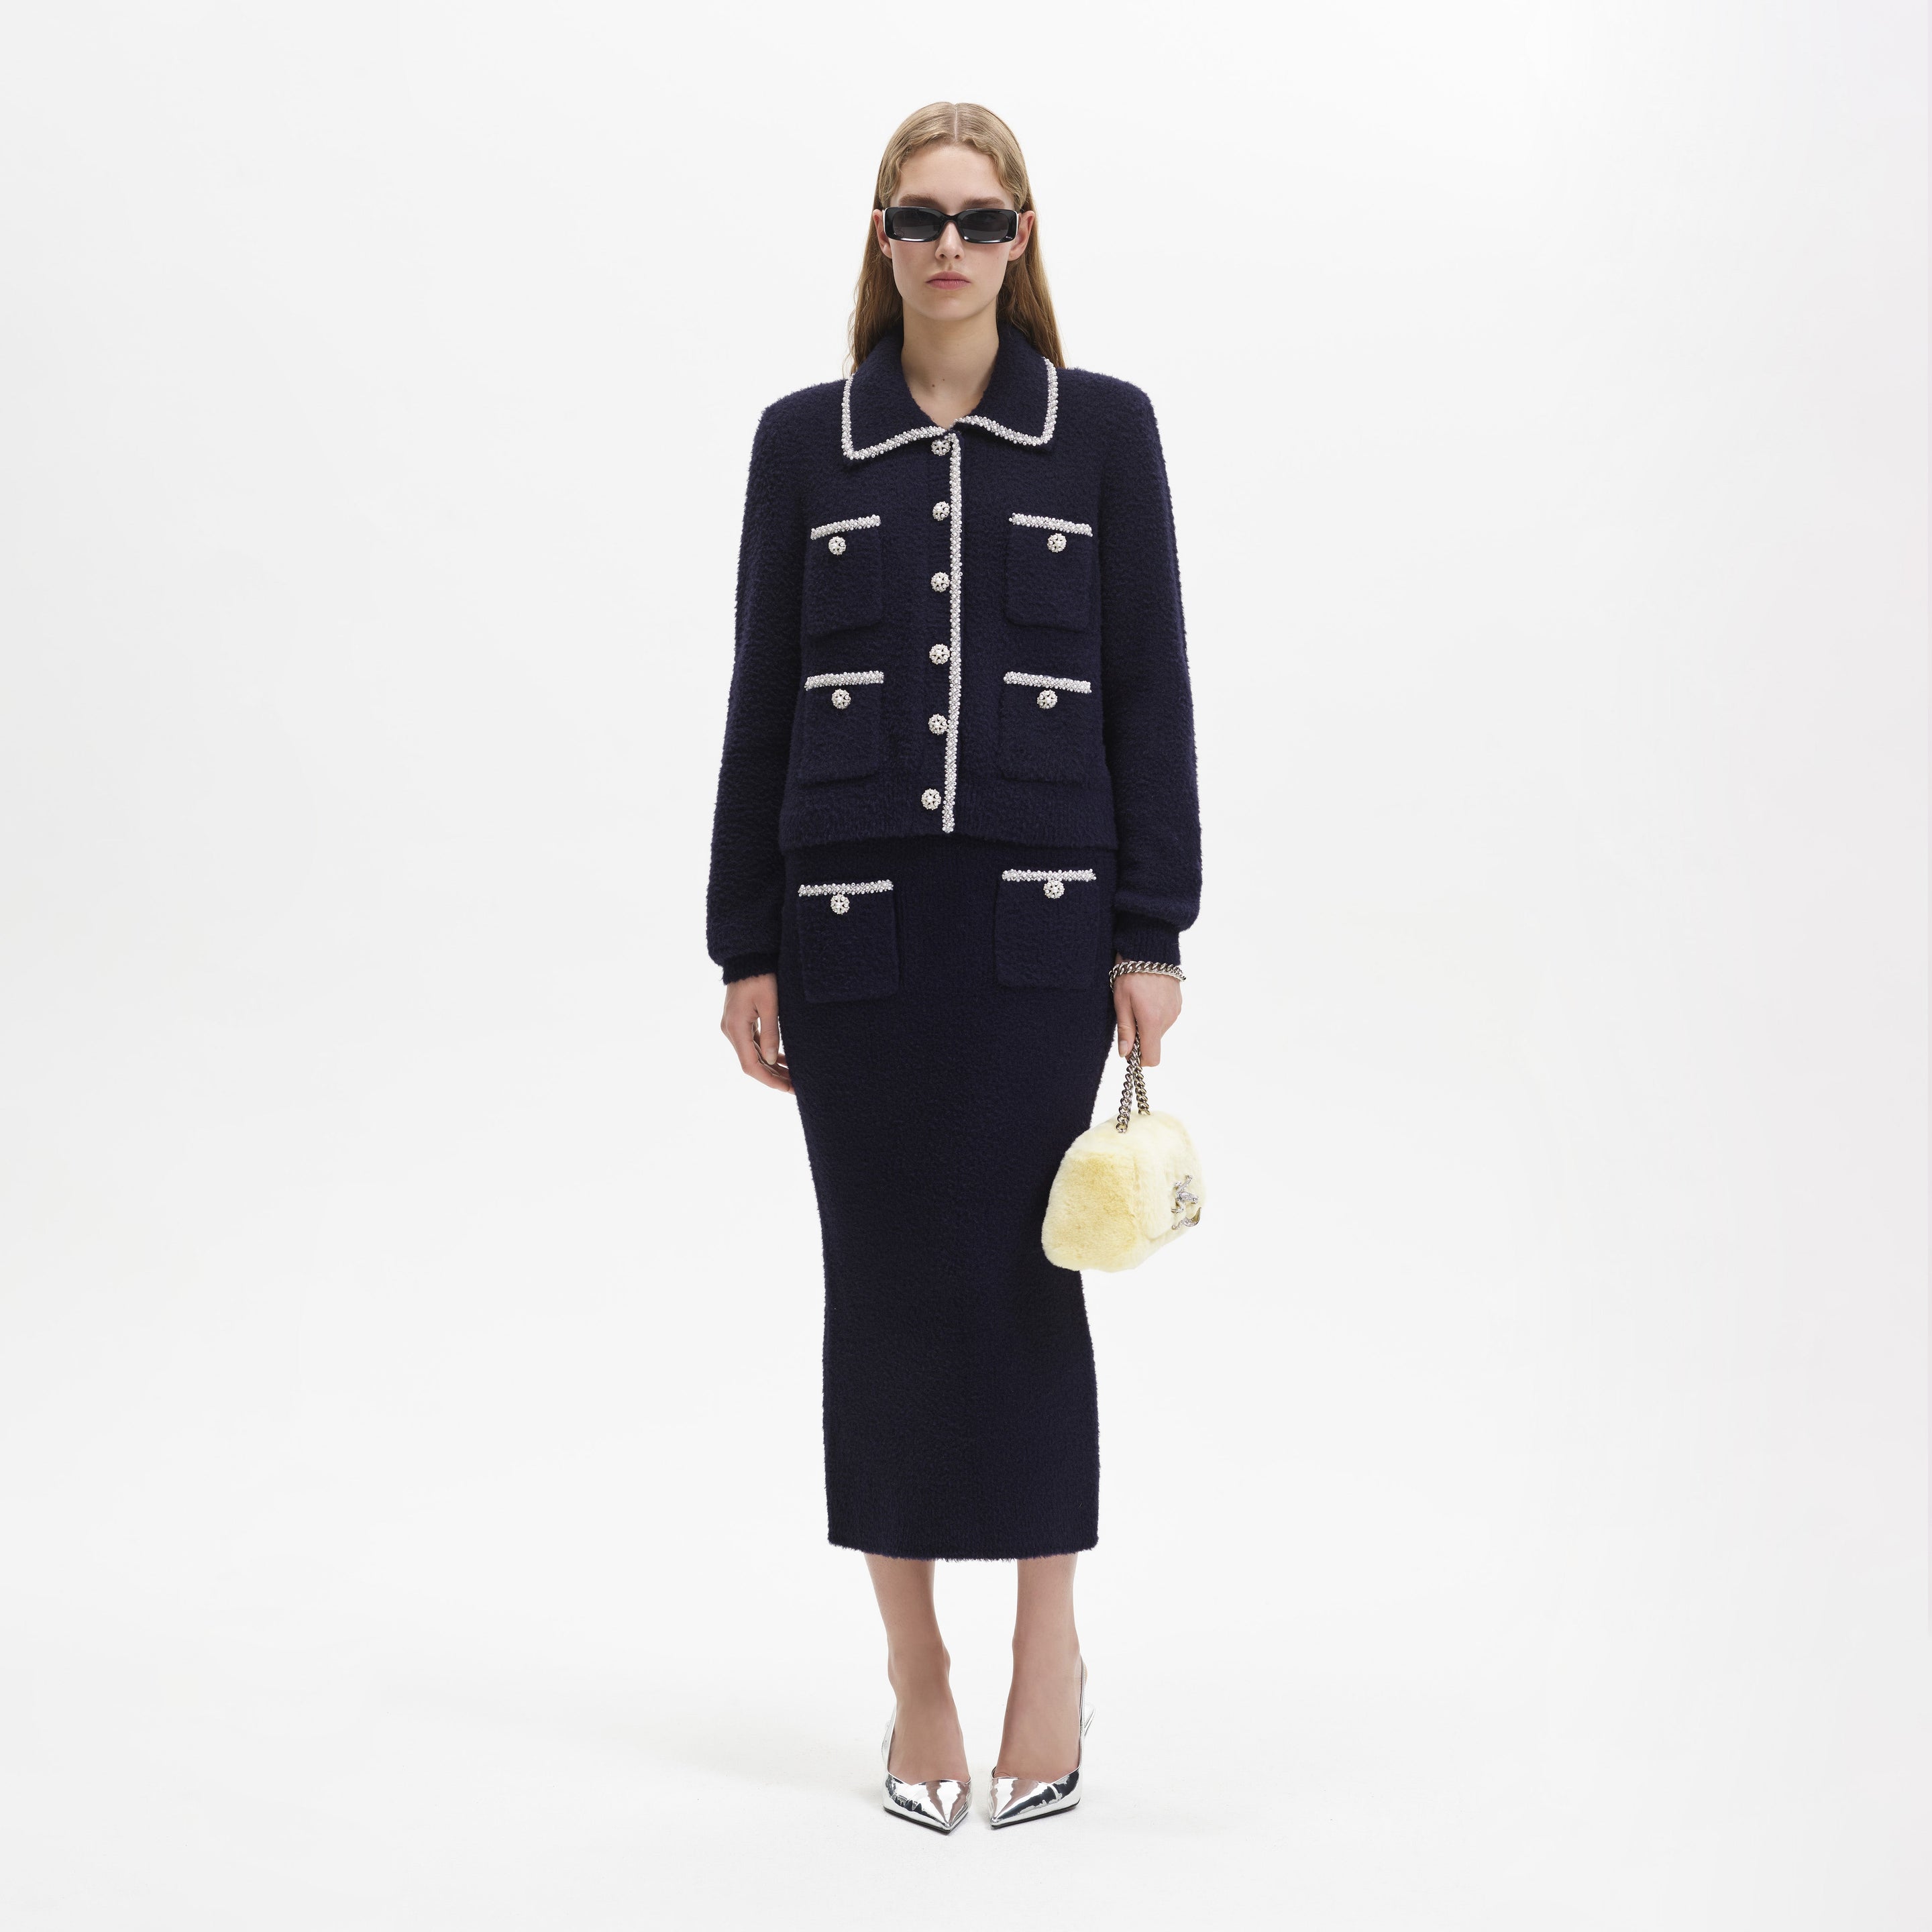 Chanel Black Knit Asymmetrical Long Sleeve Top M Chanel